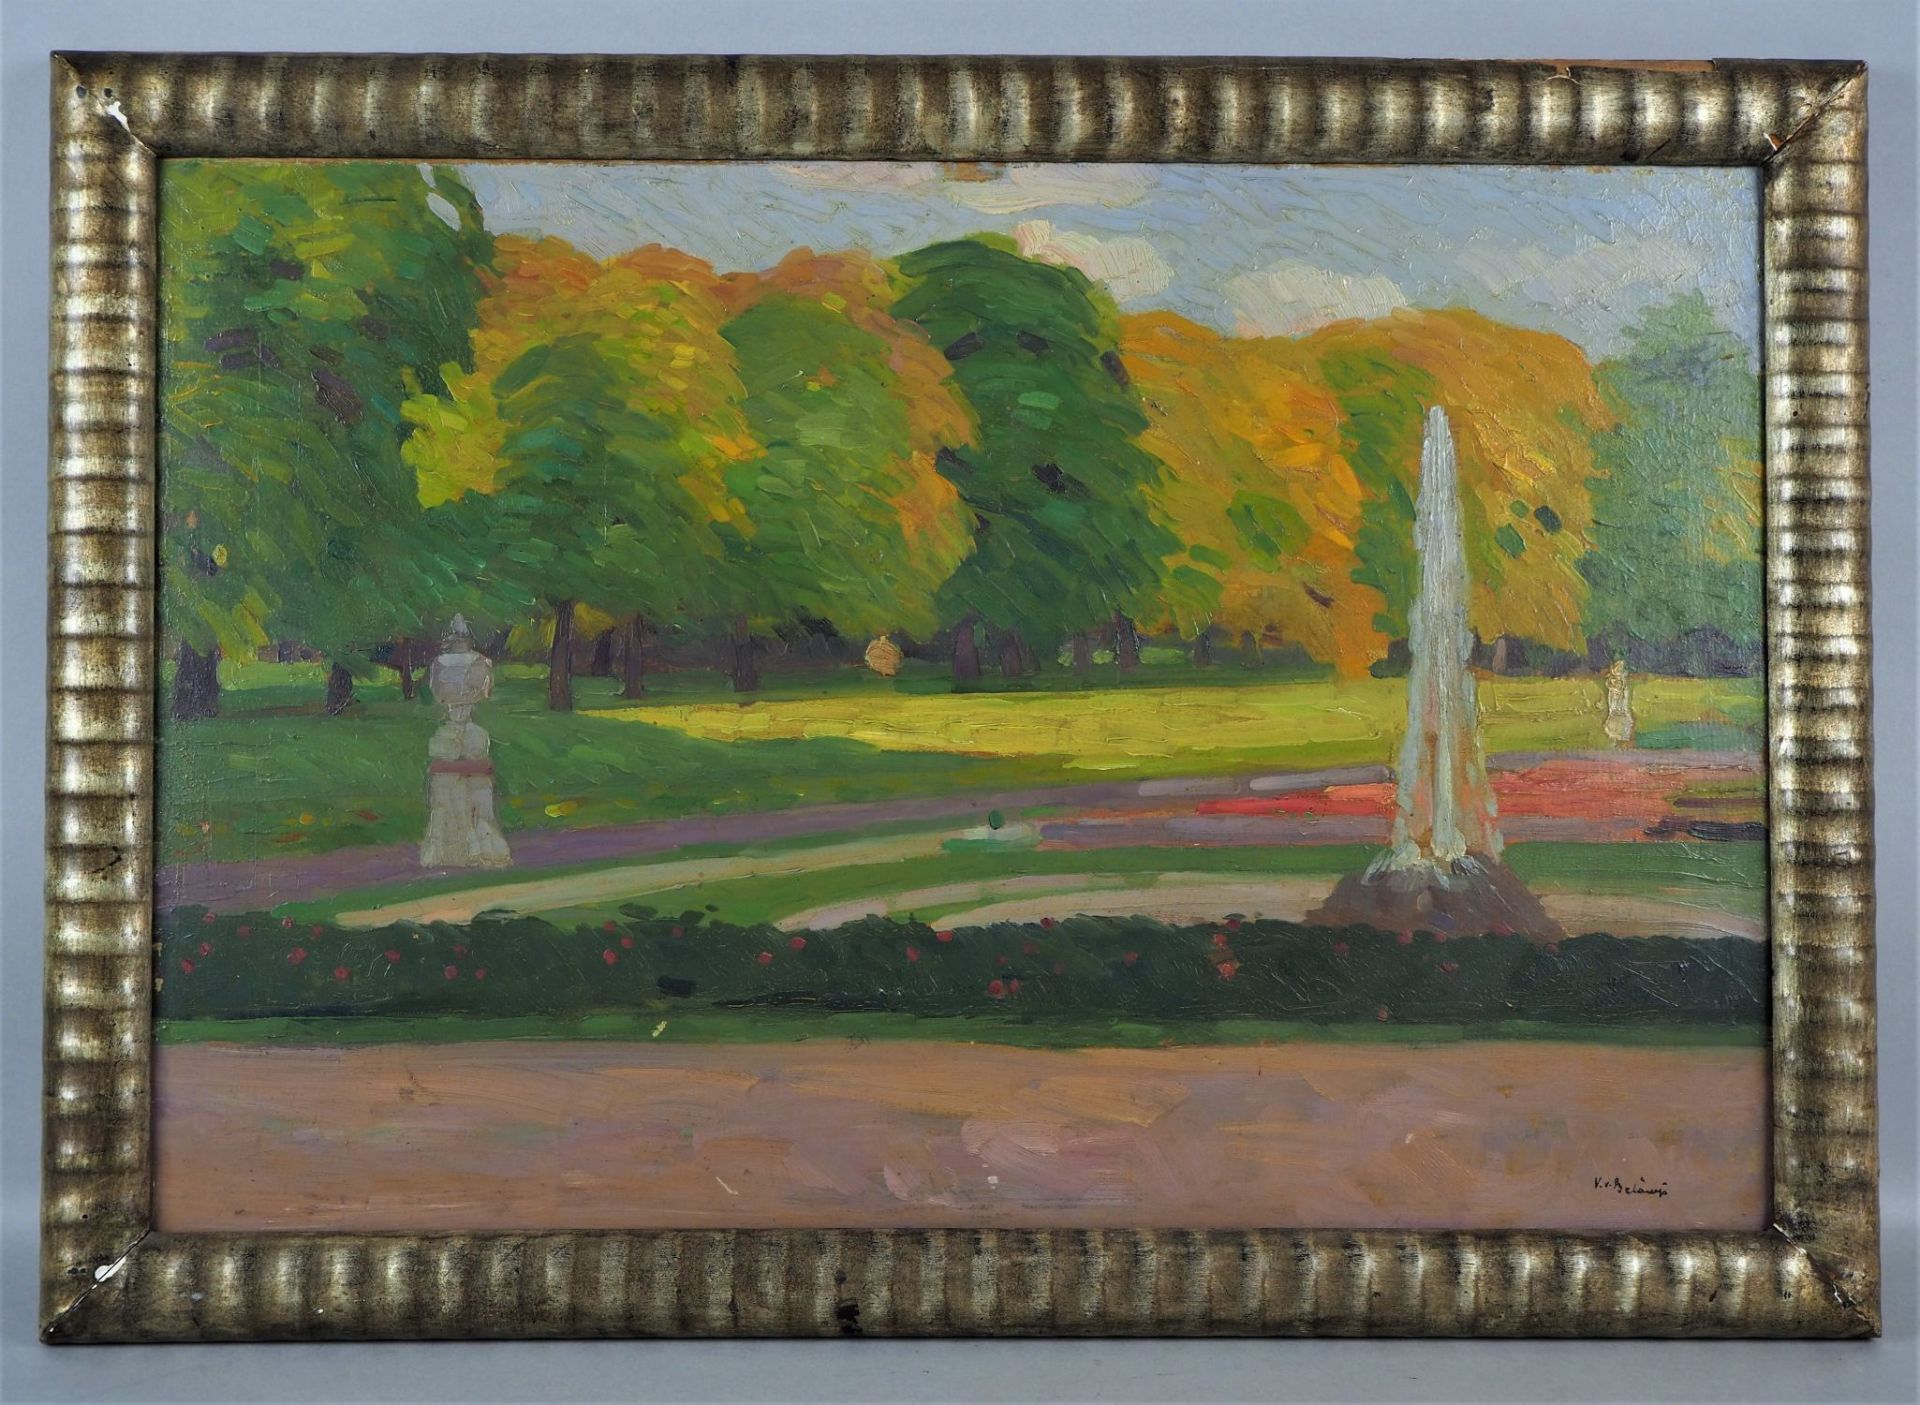 Impressionism Oil painting "Park Landscape", probably France around 1900.